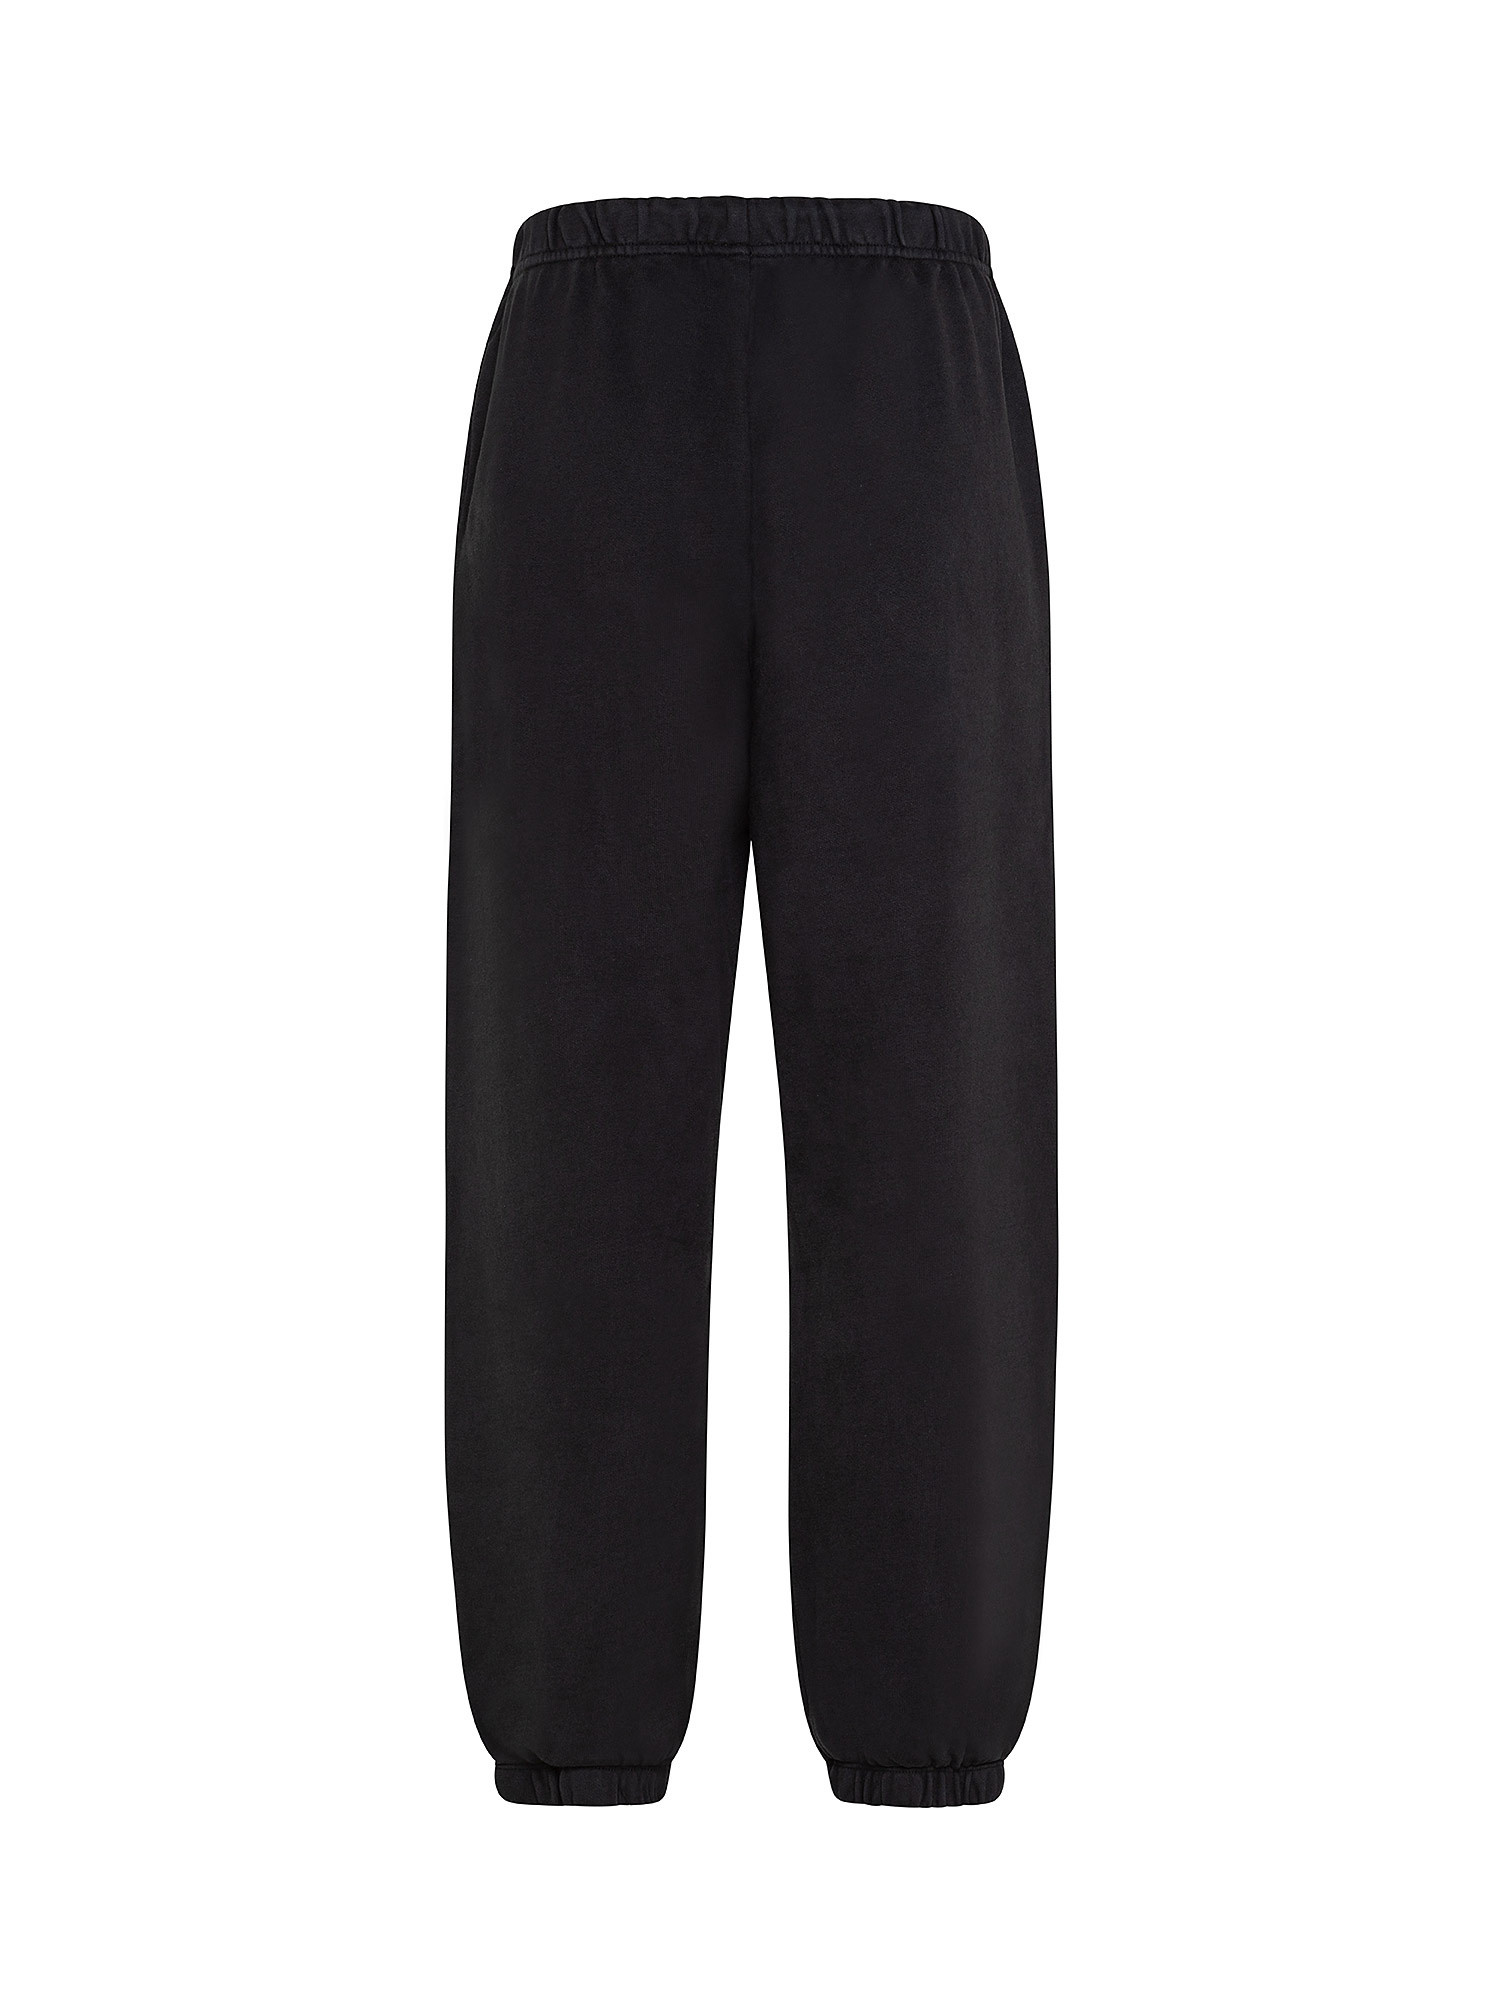 WFH Loungewear sweatpants, Black, large image number 1